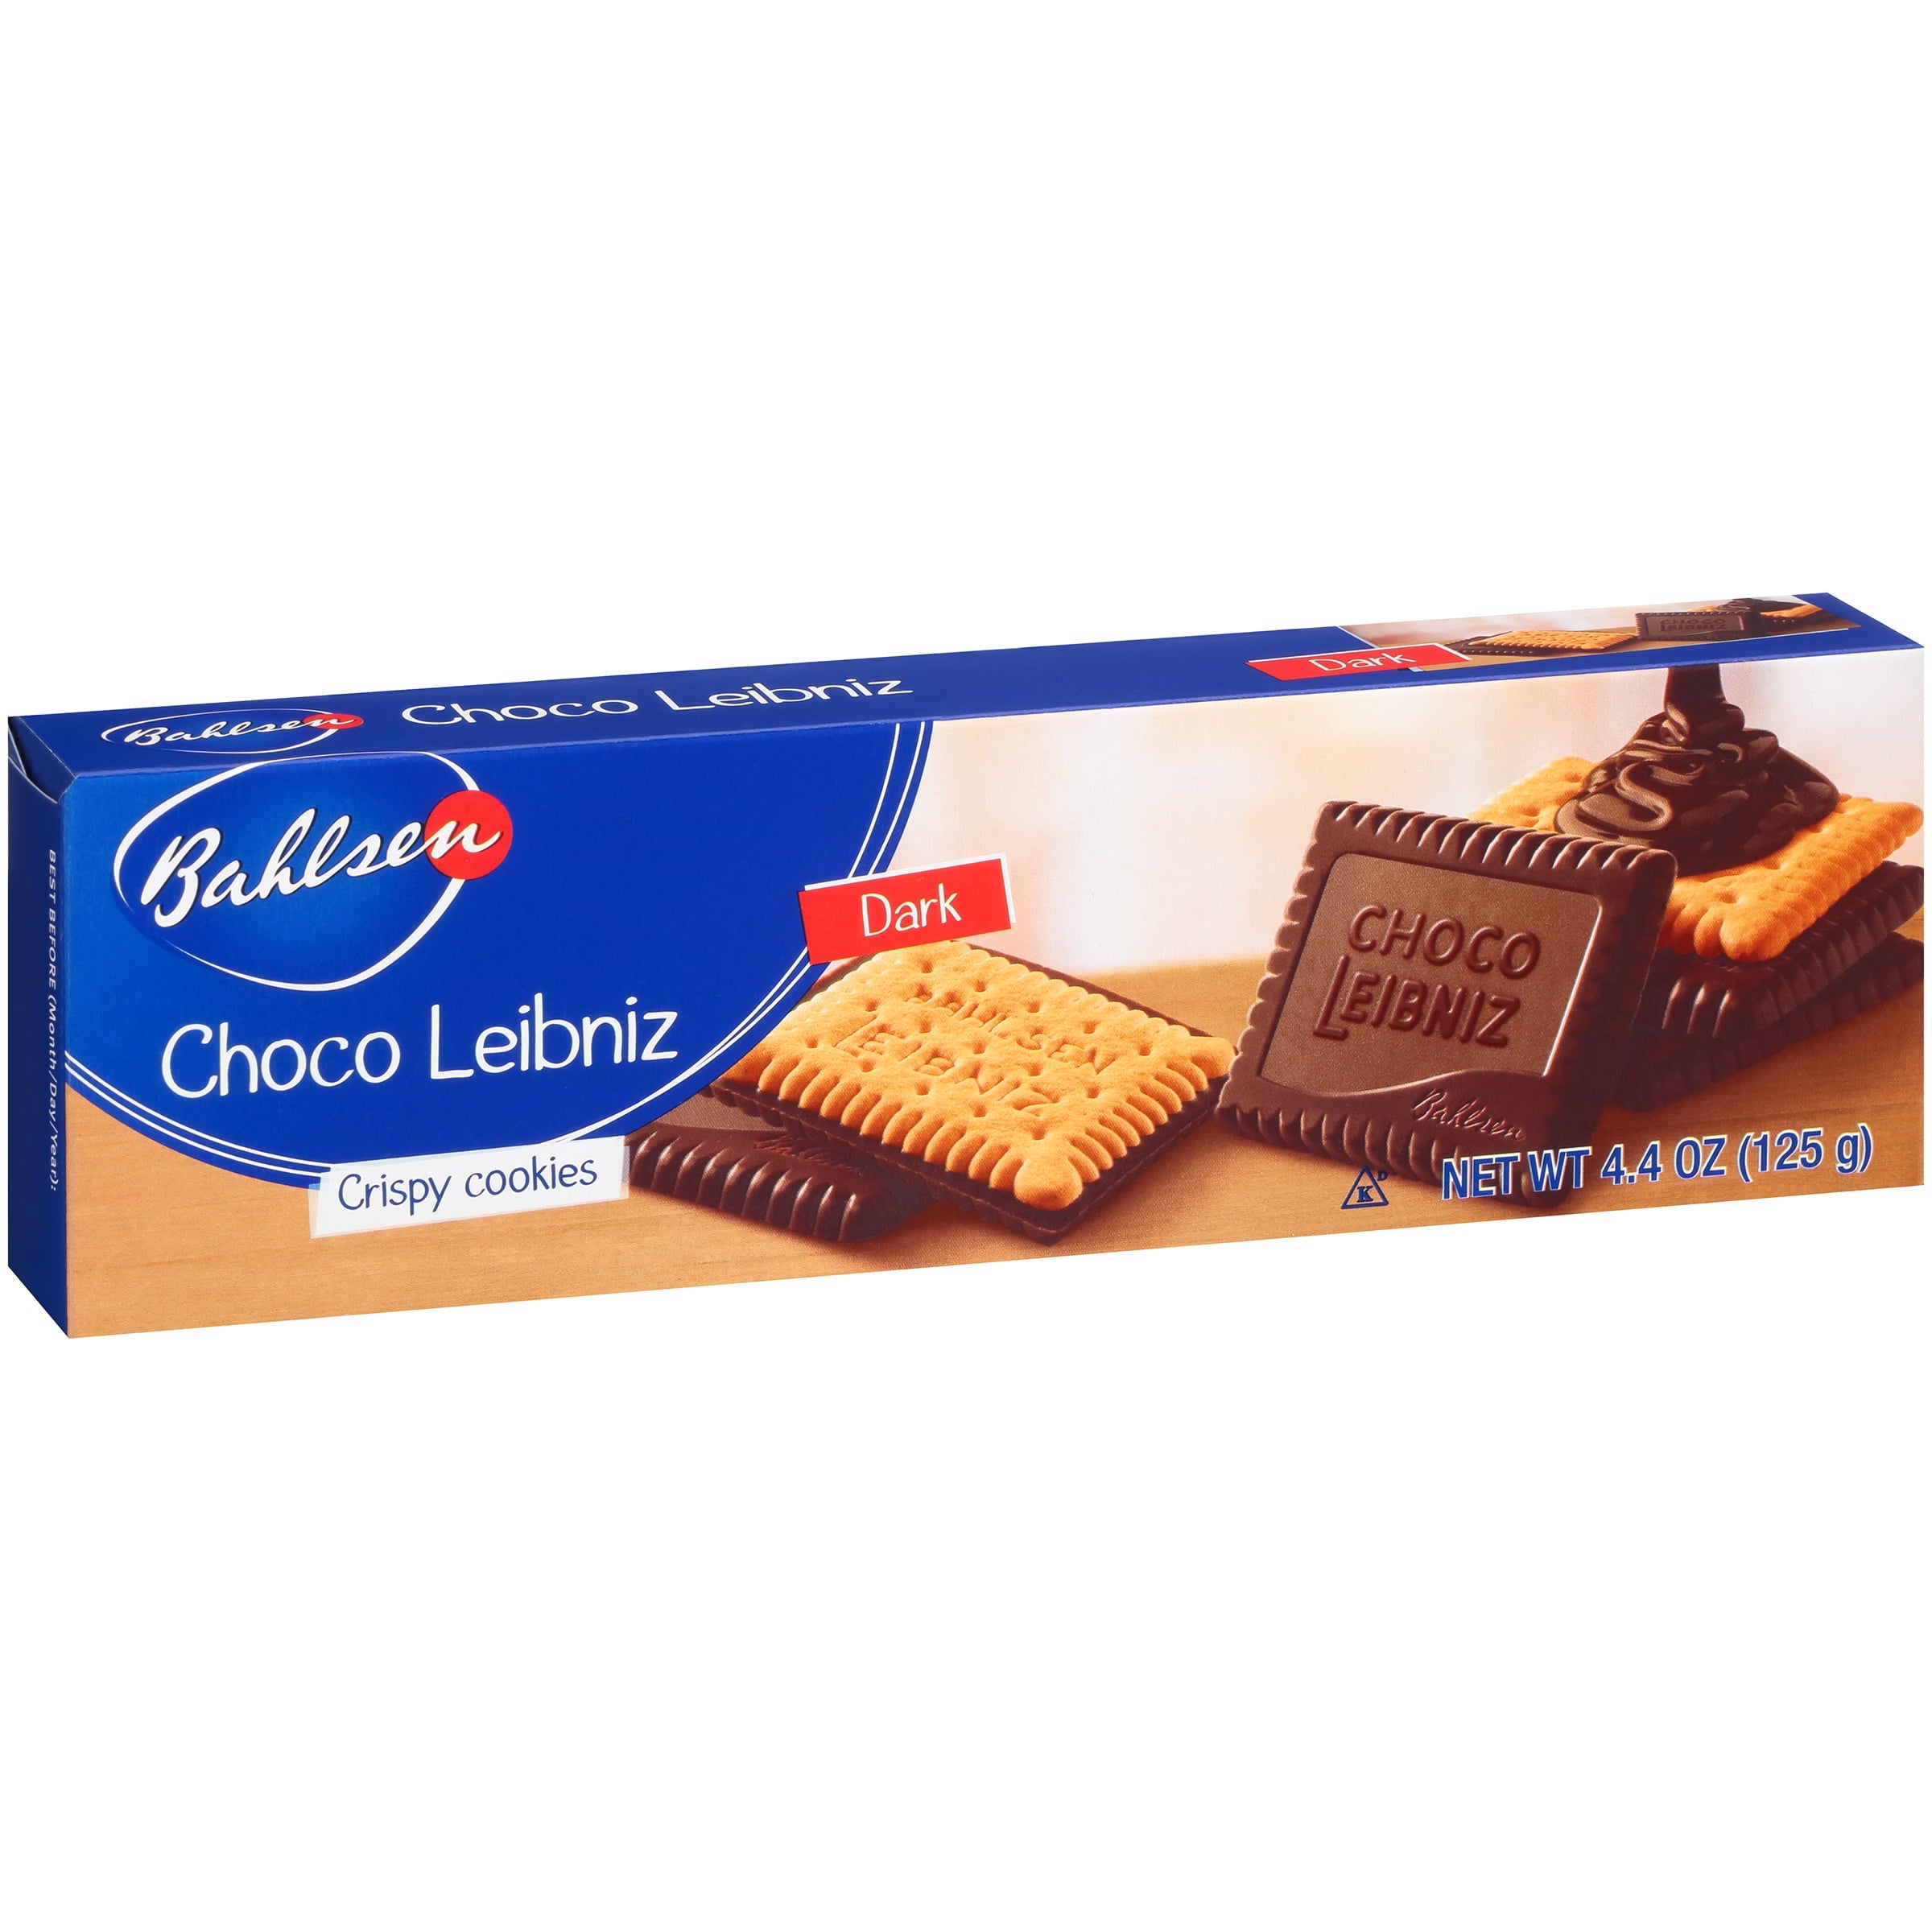 Bahlsen Choco Leibniz Dark Cookies 4.4 oz. Box